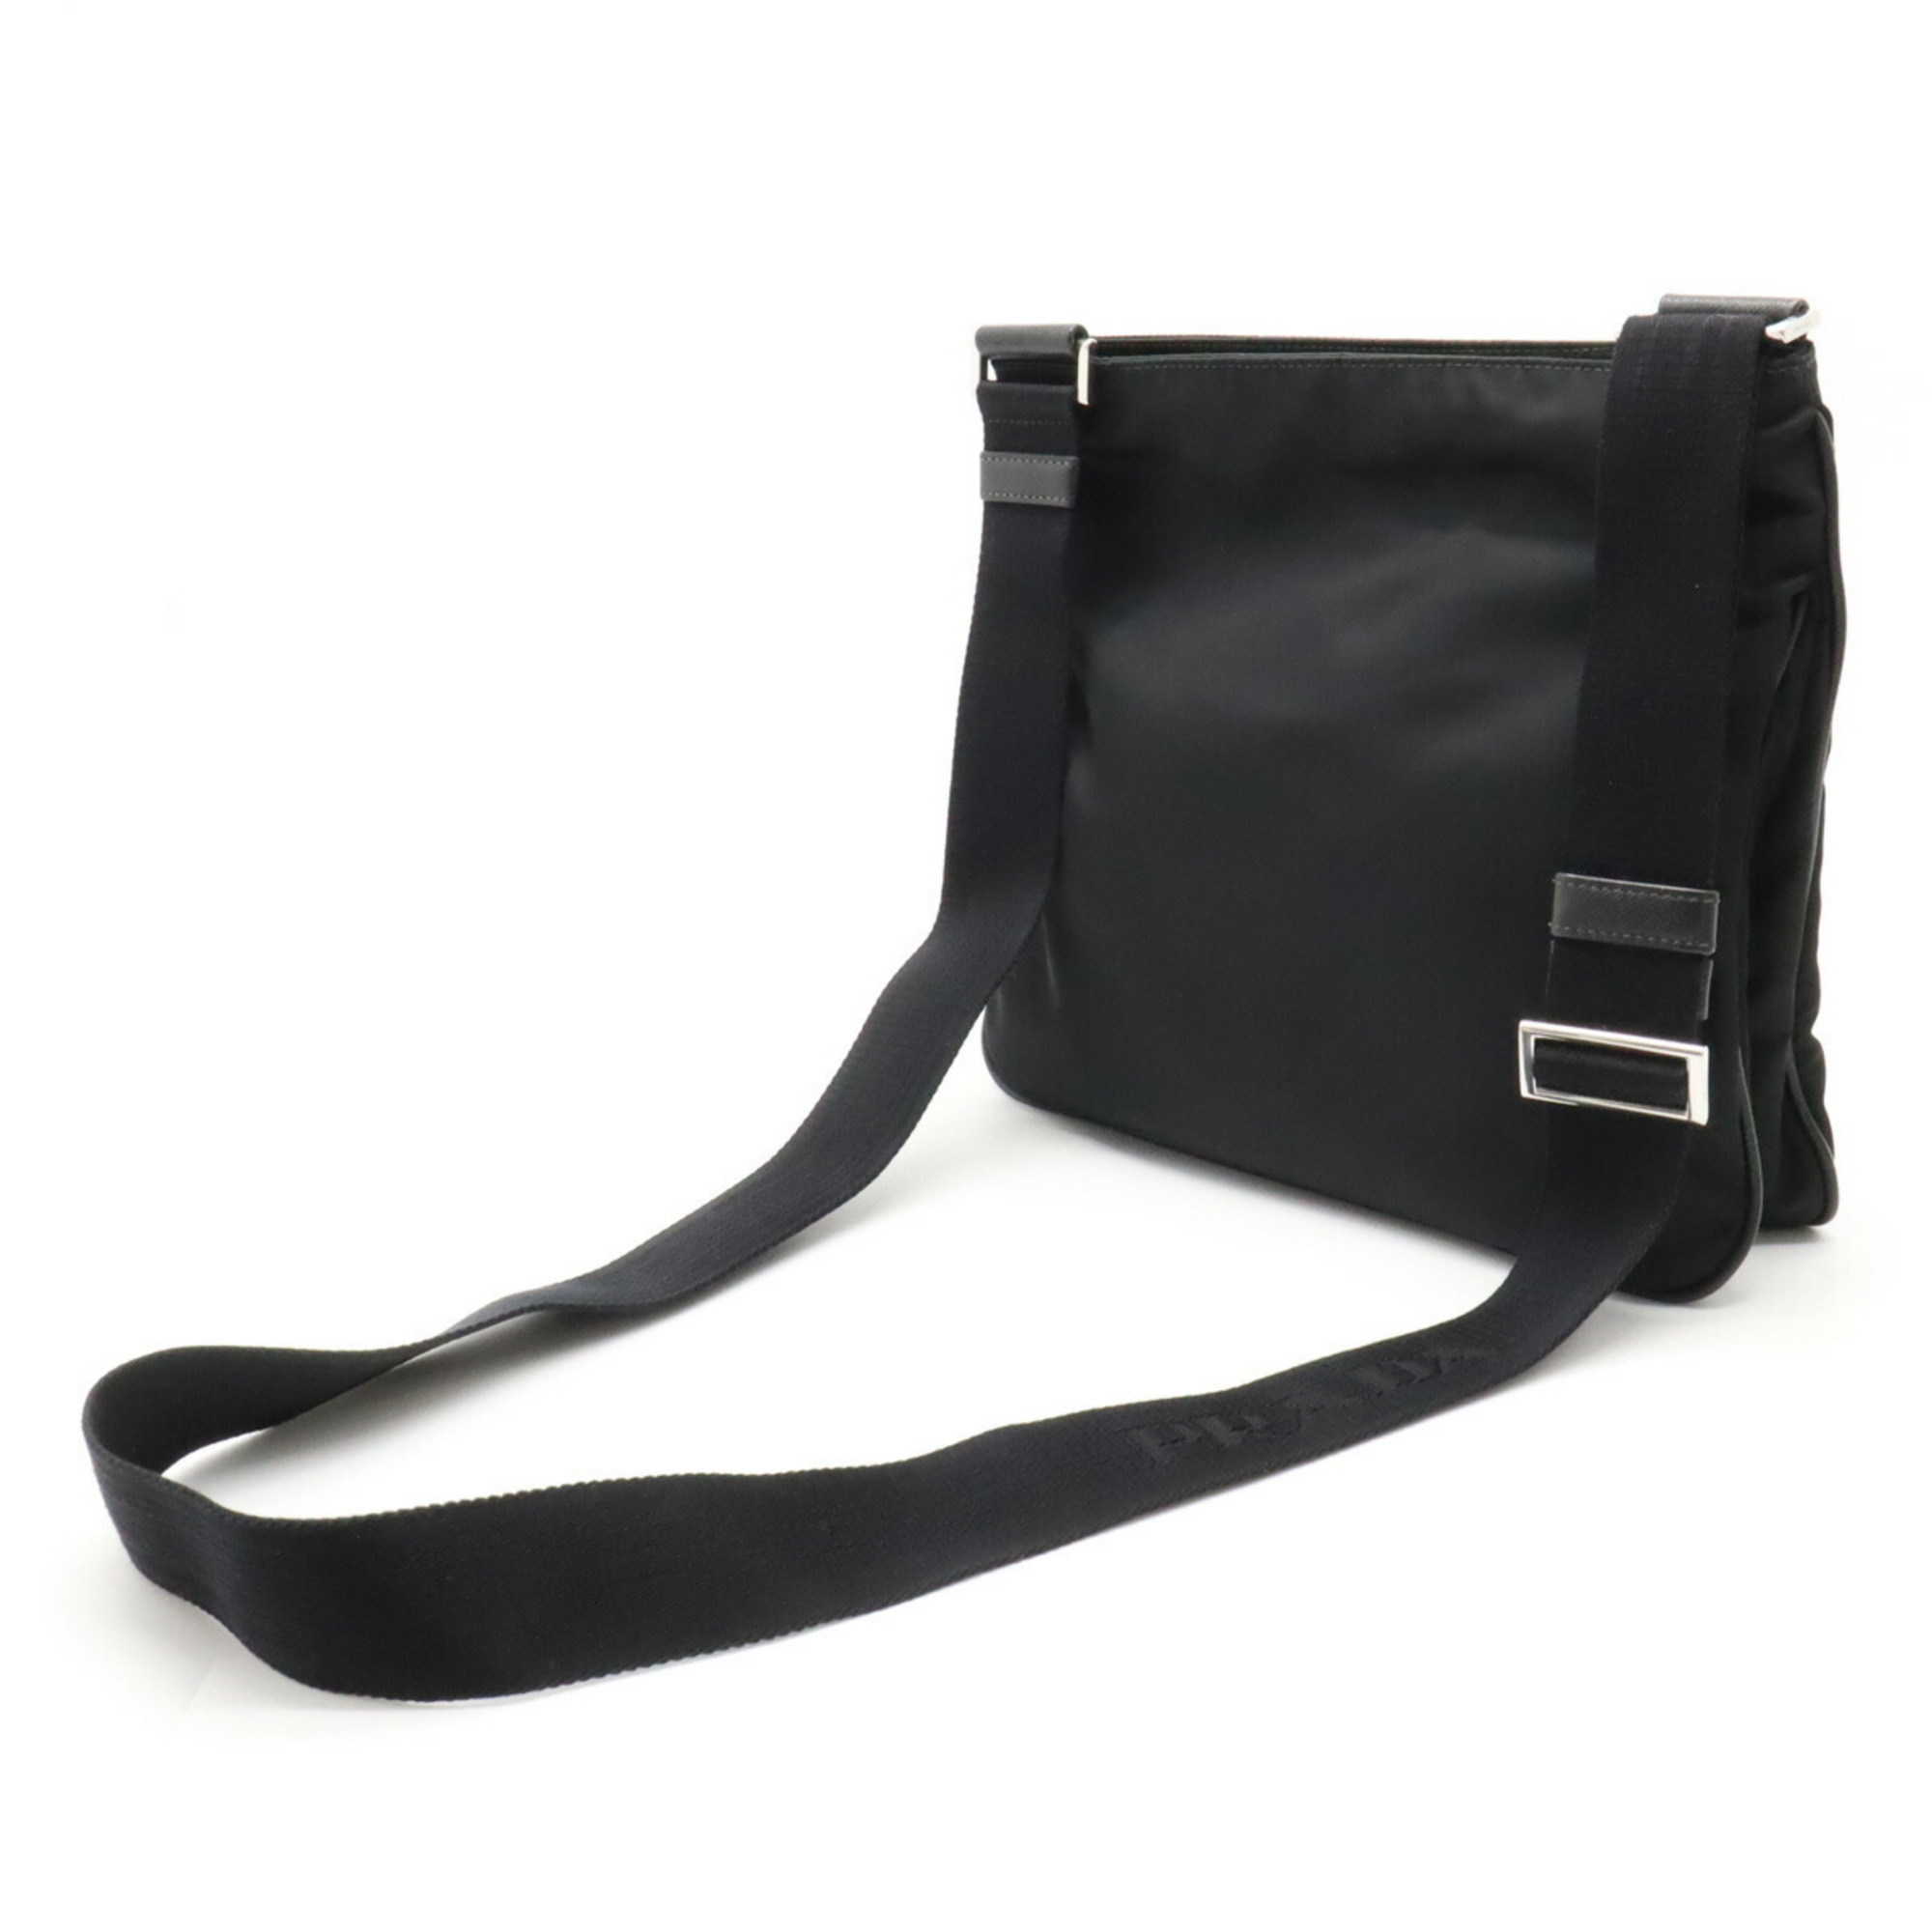 PRADA Prada shoulder bag nylon leather NERO black VA0563